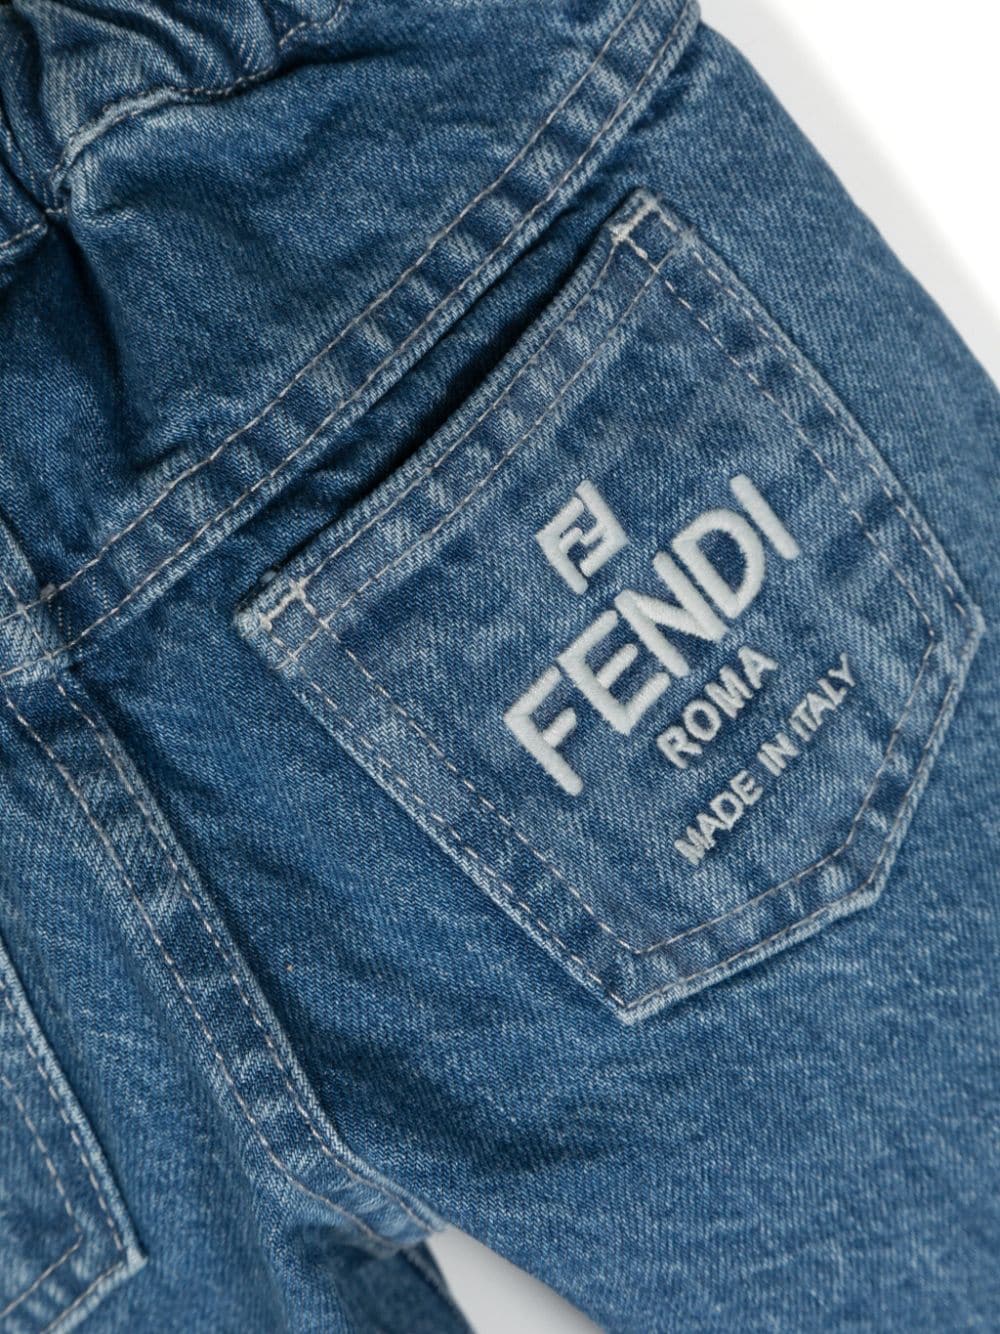 Fendi Kids Jeans met geborduurd logo Blauw